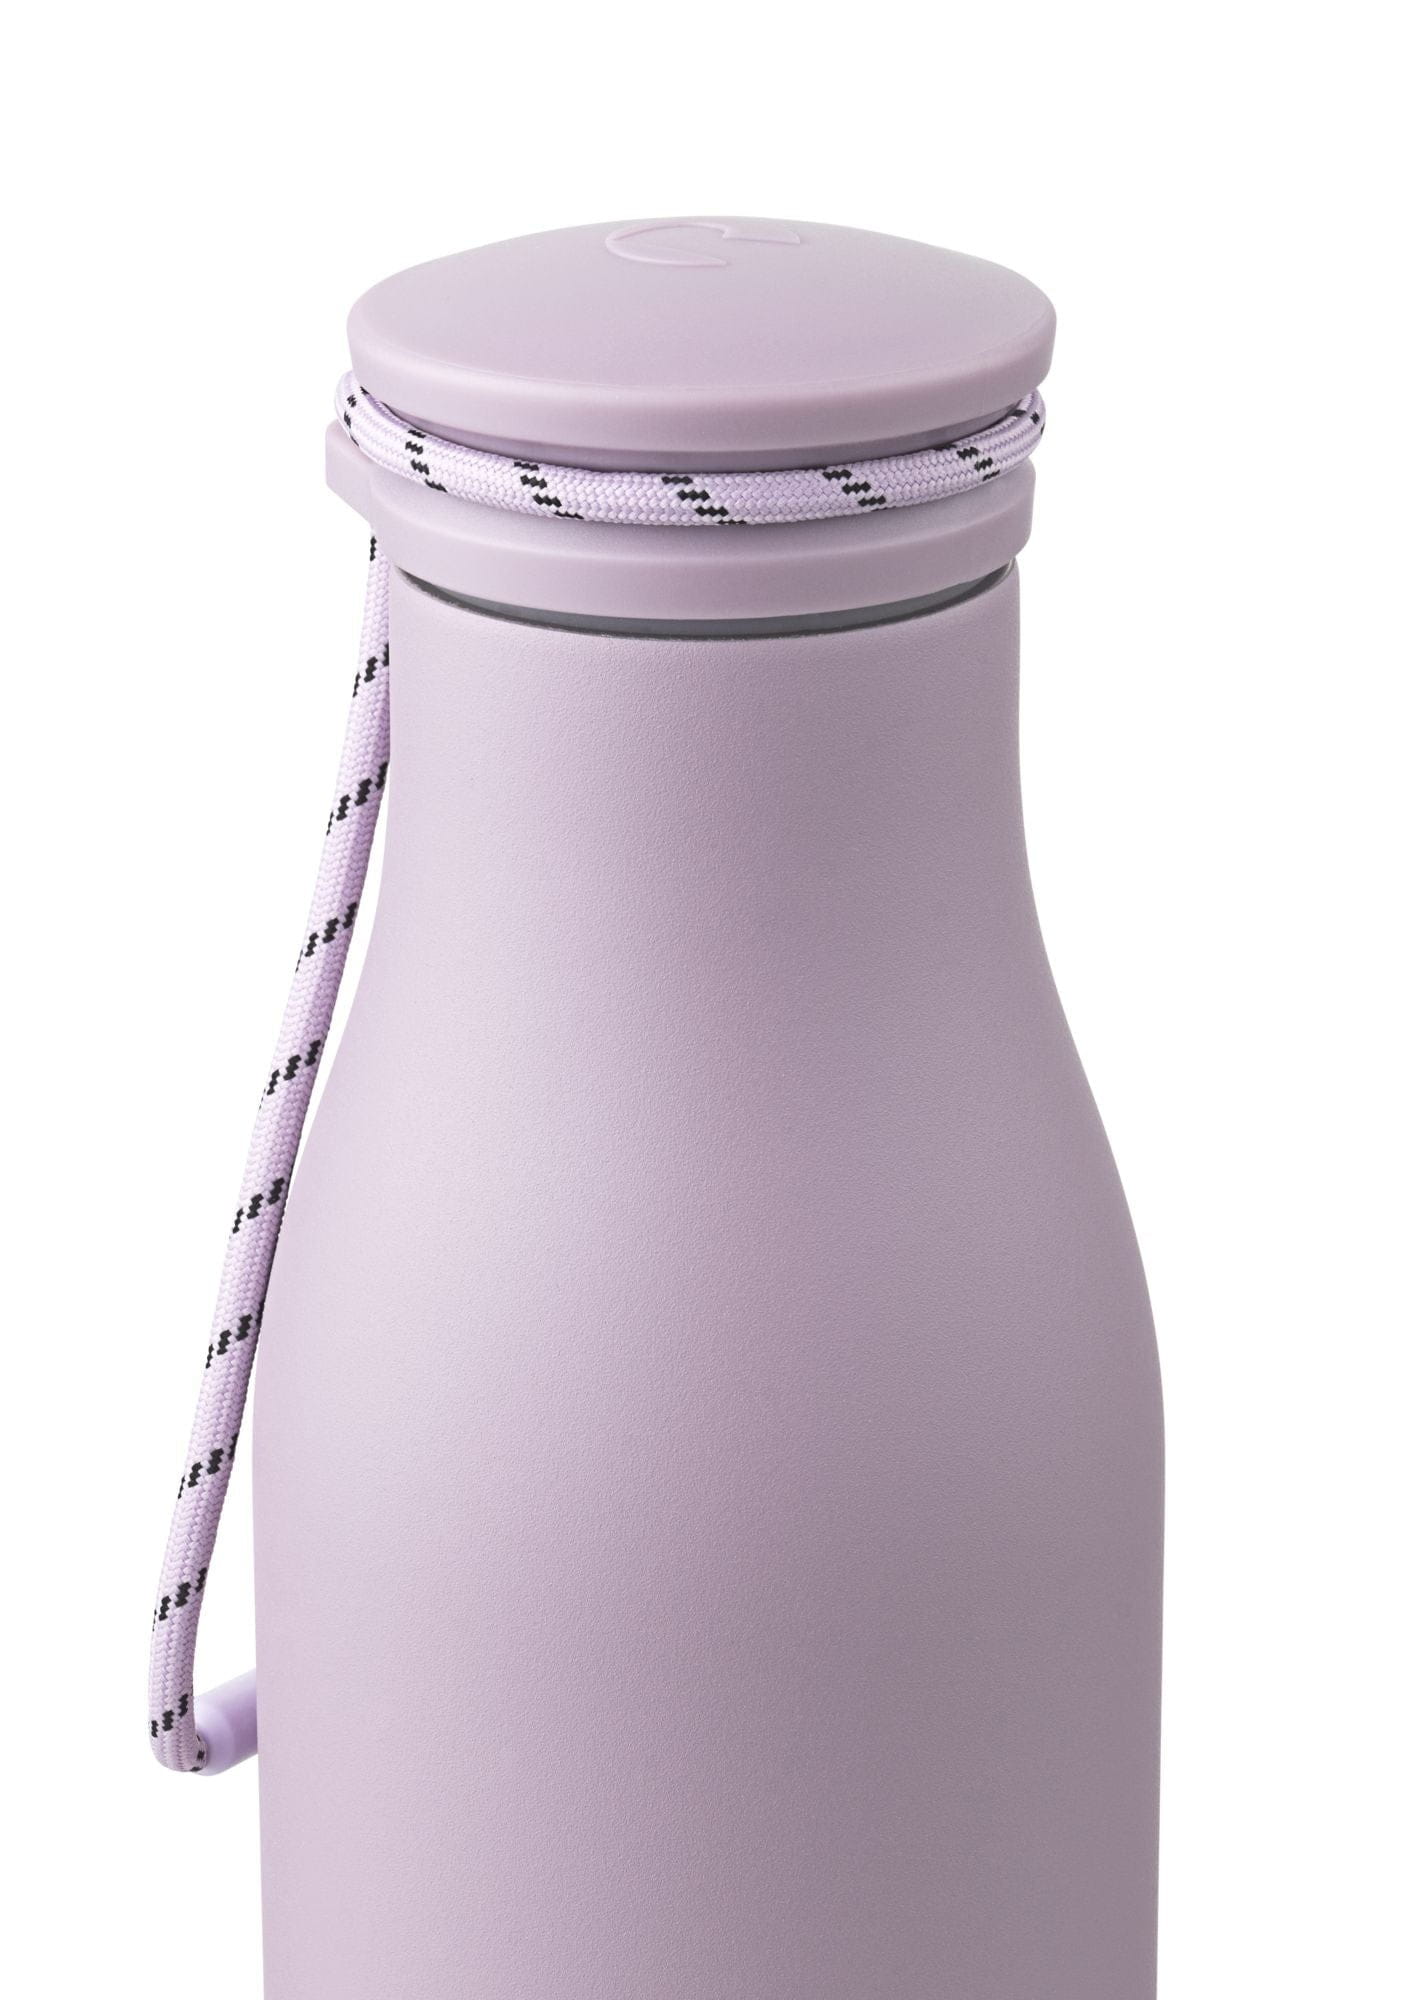 Rosendahl GC Outdoor Thermo Drinking Bottle 500 ml, lavendel